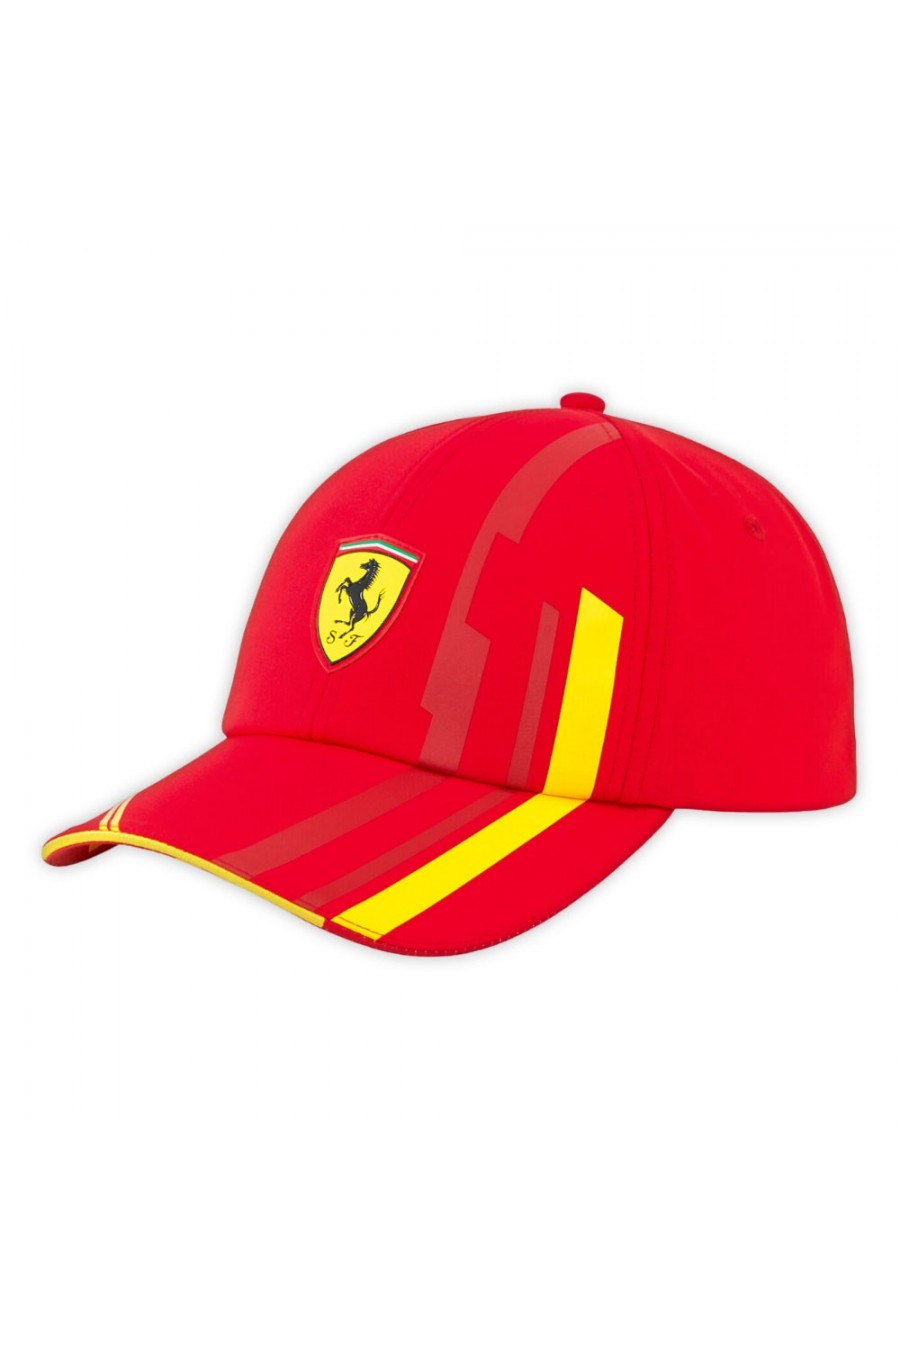 Scuderia Ferrari Monza Casquette Sainz